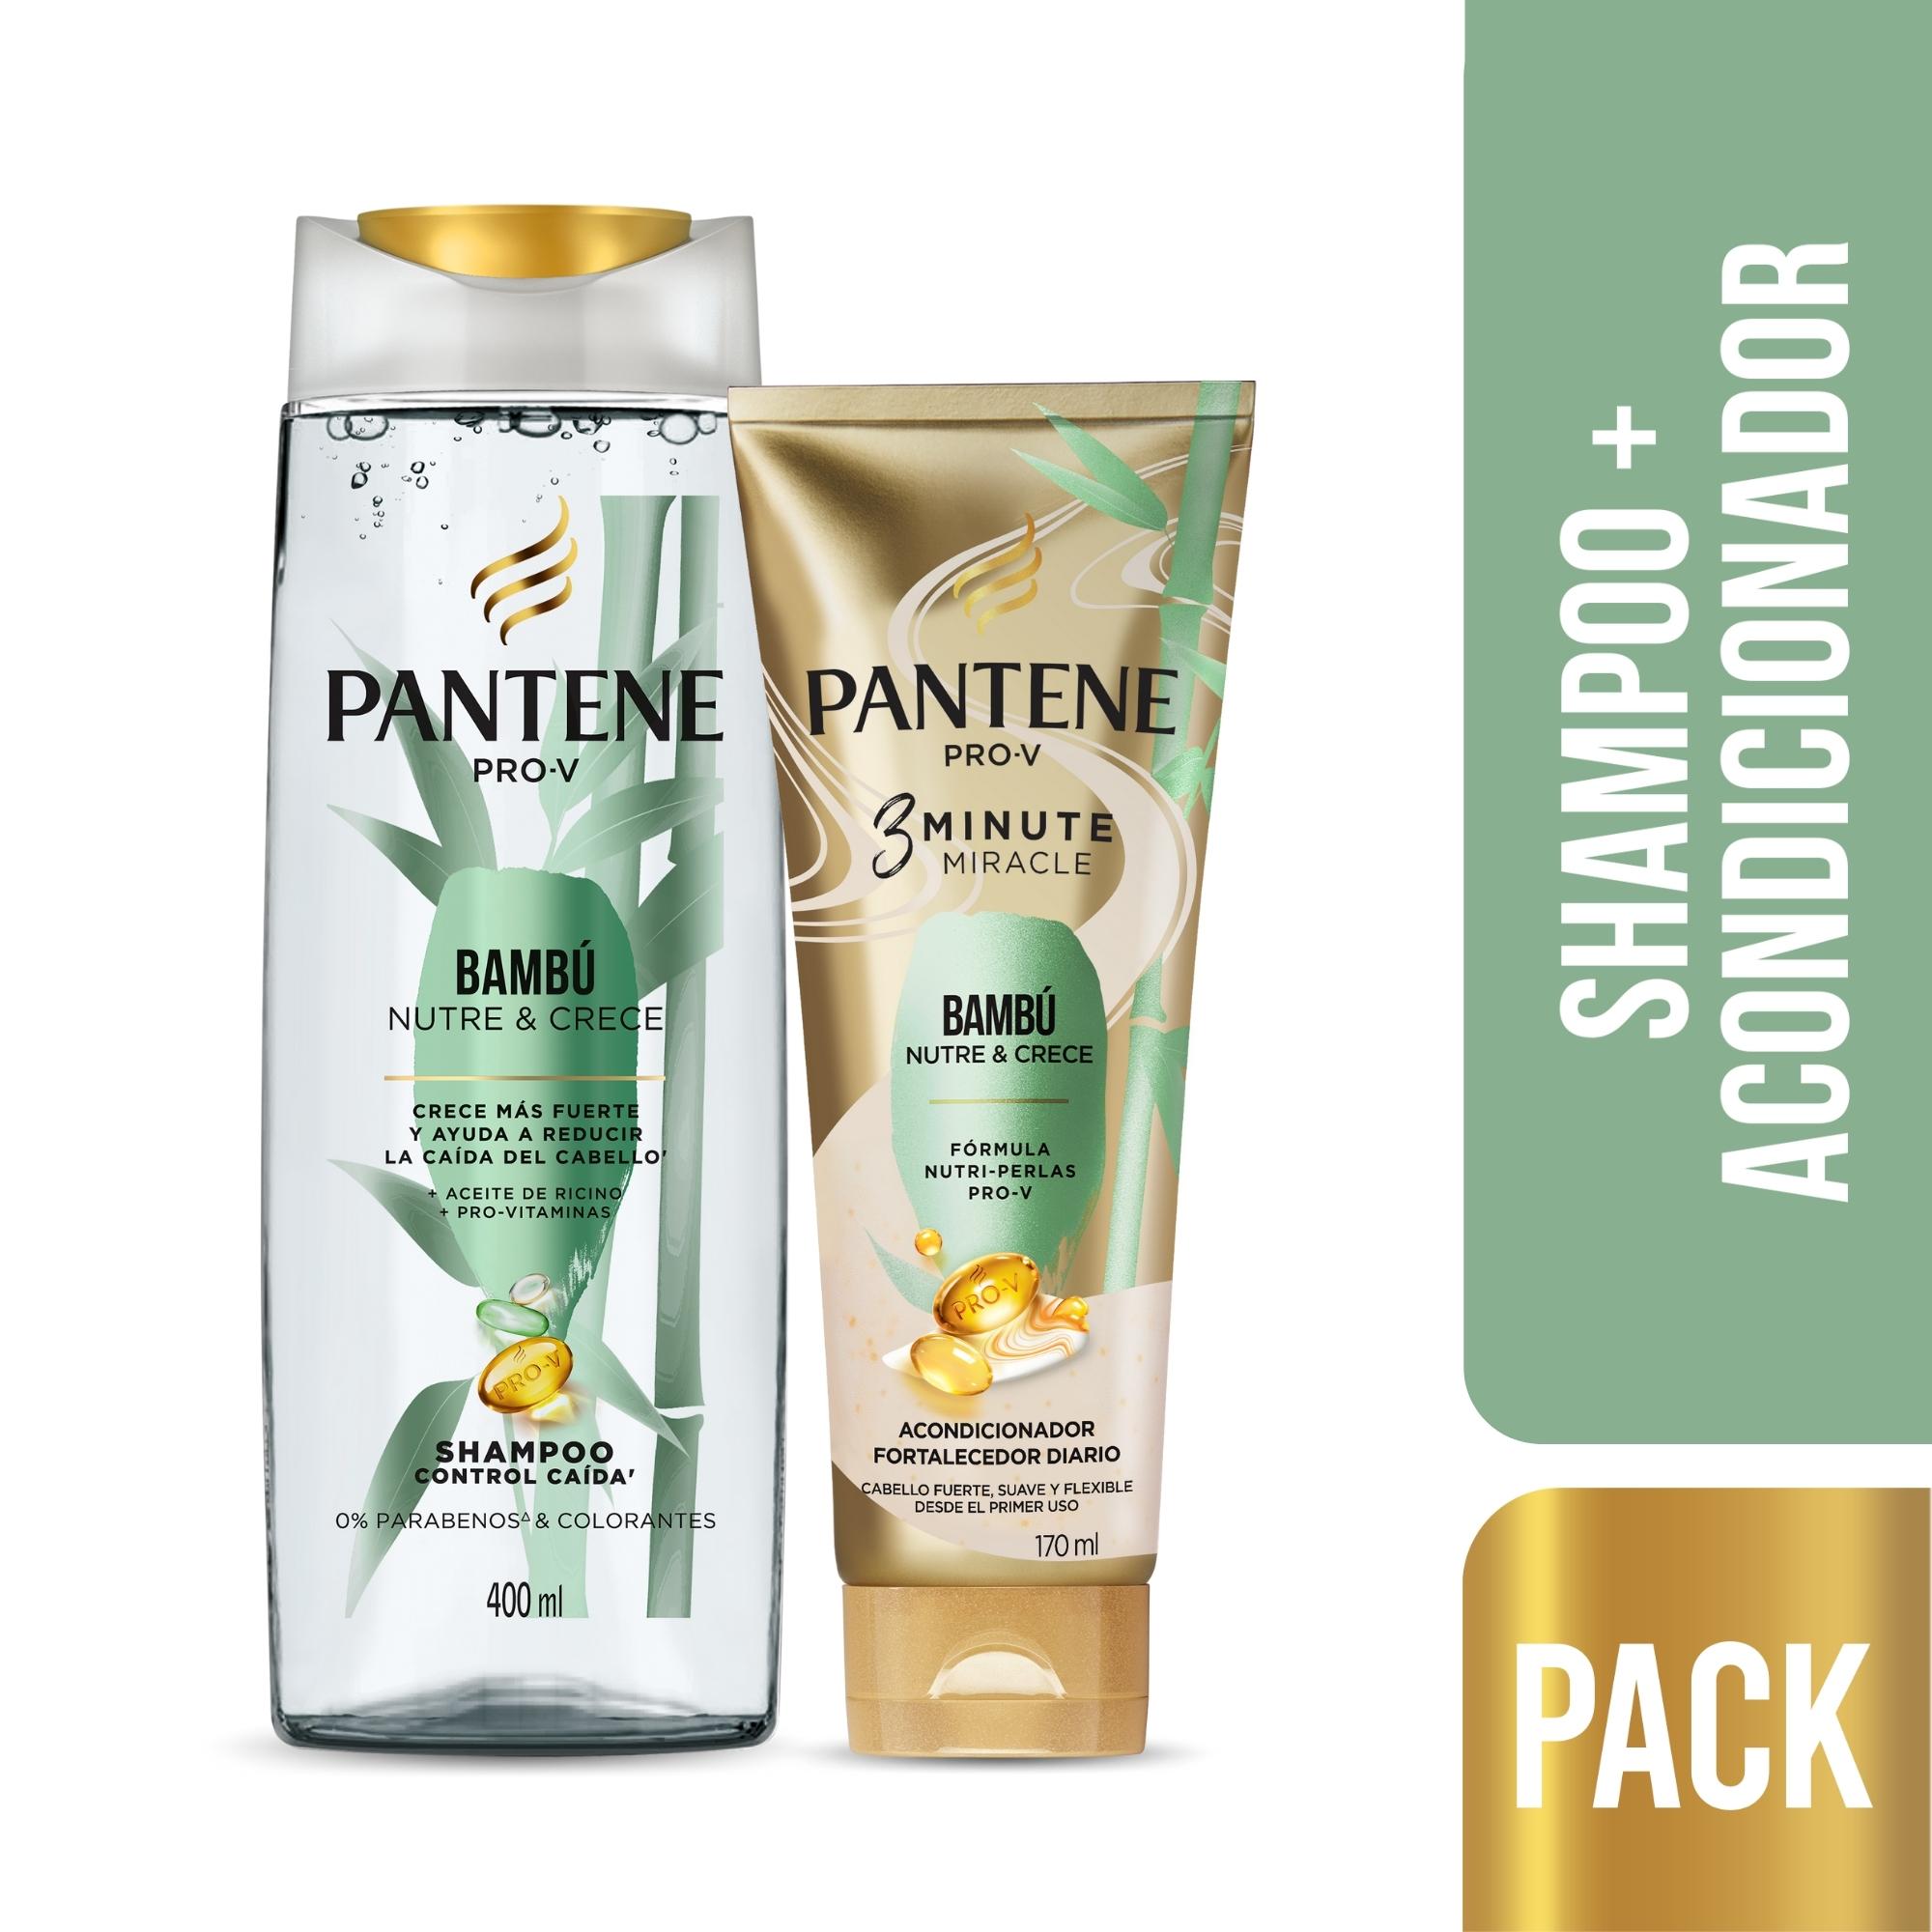 Pack Pantene Pro-V Bambú: Shampoo 400ml + Acondicionador 3 Minute Miracle 170ml